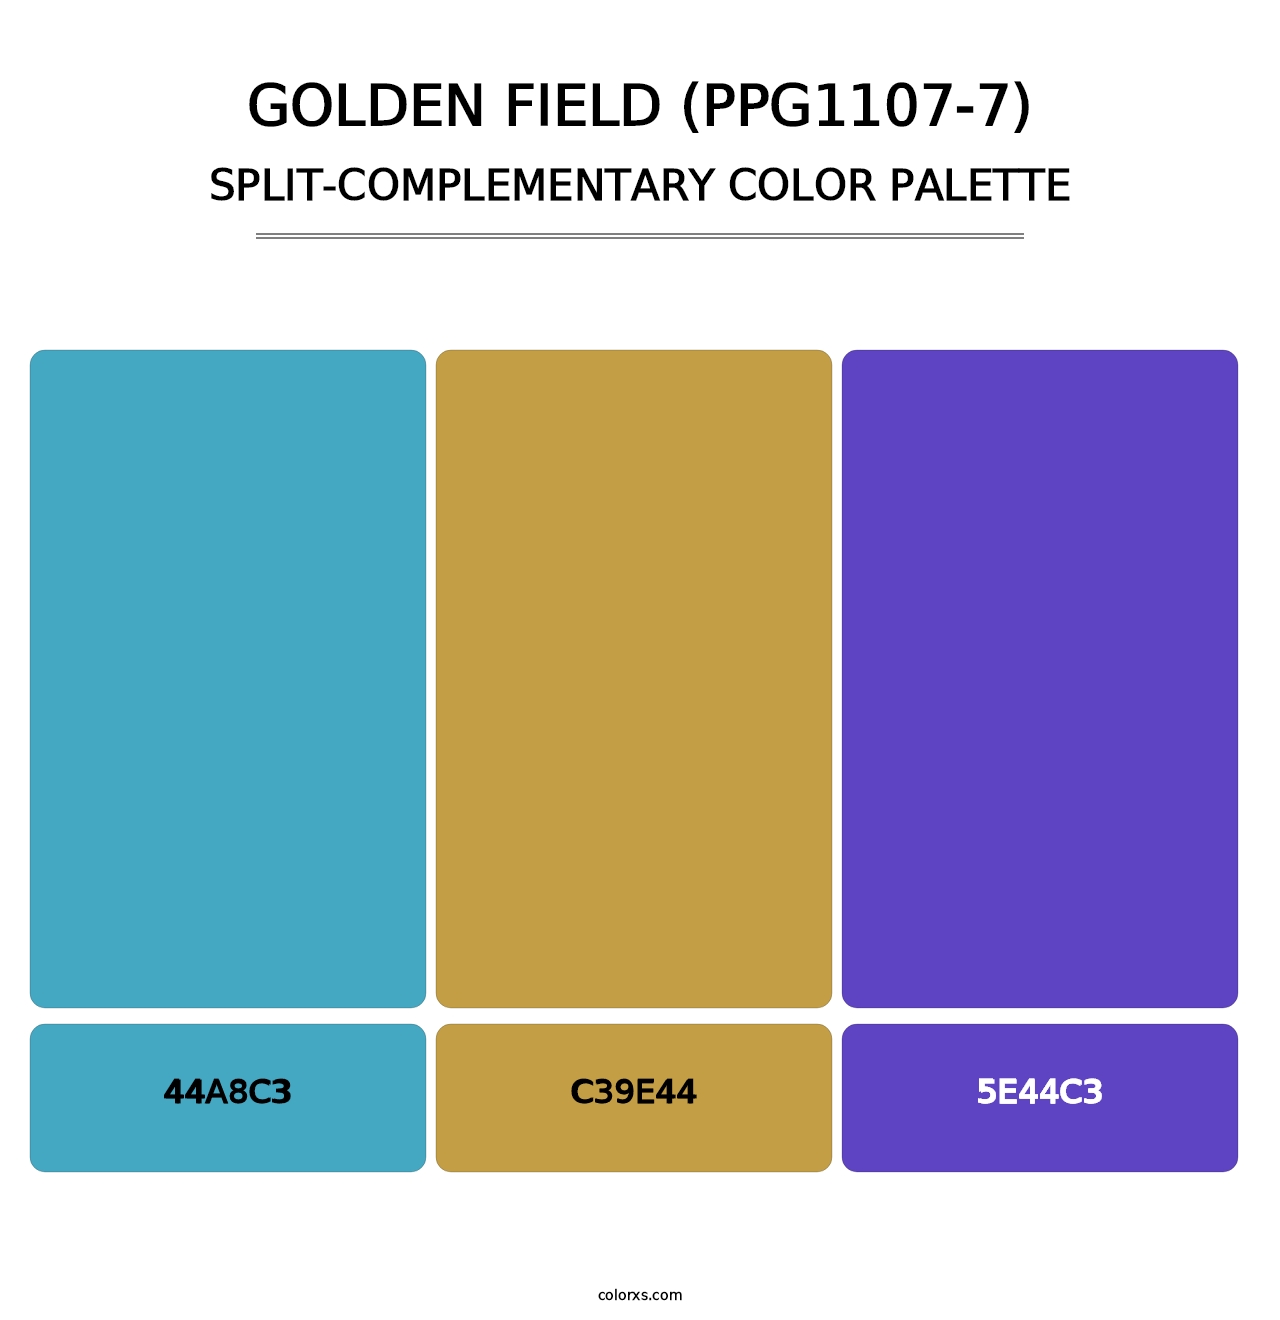 Golden Field (PPG1107-7) - Split-Complementary Color Palette